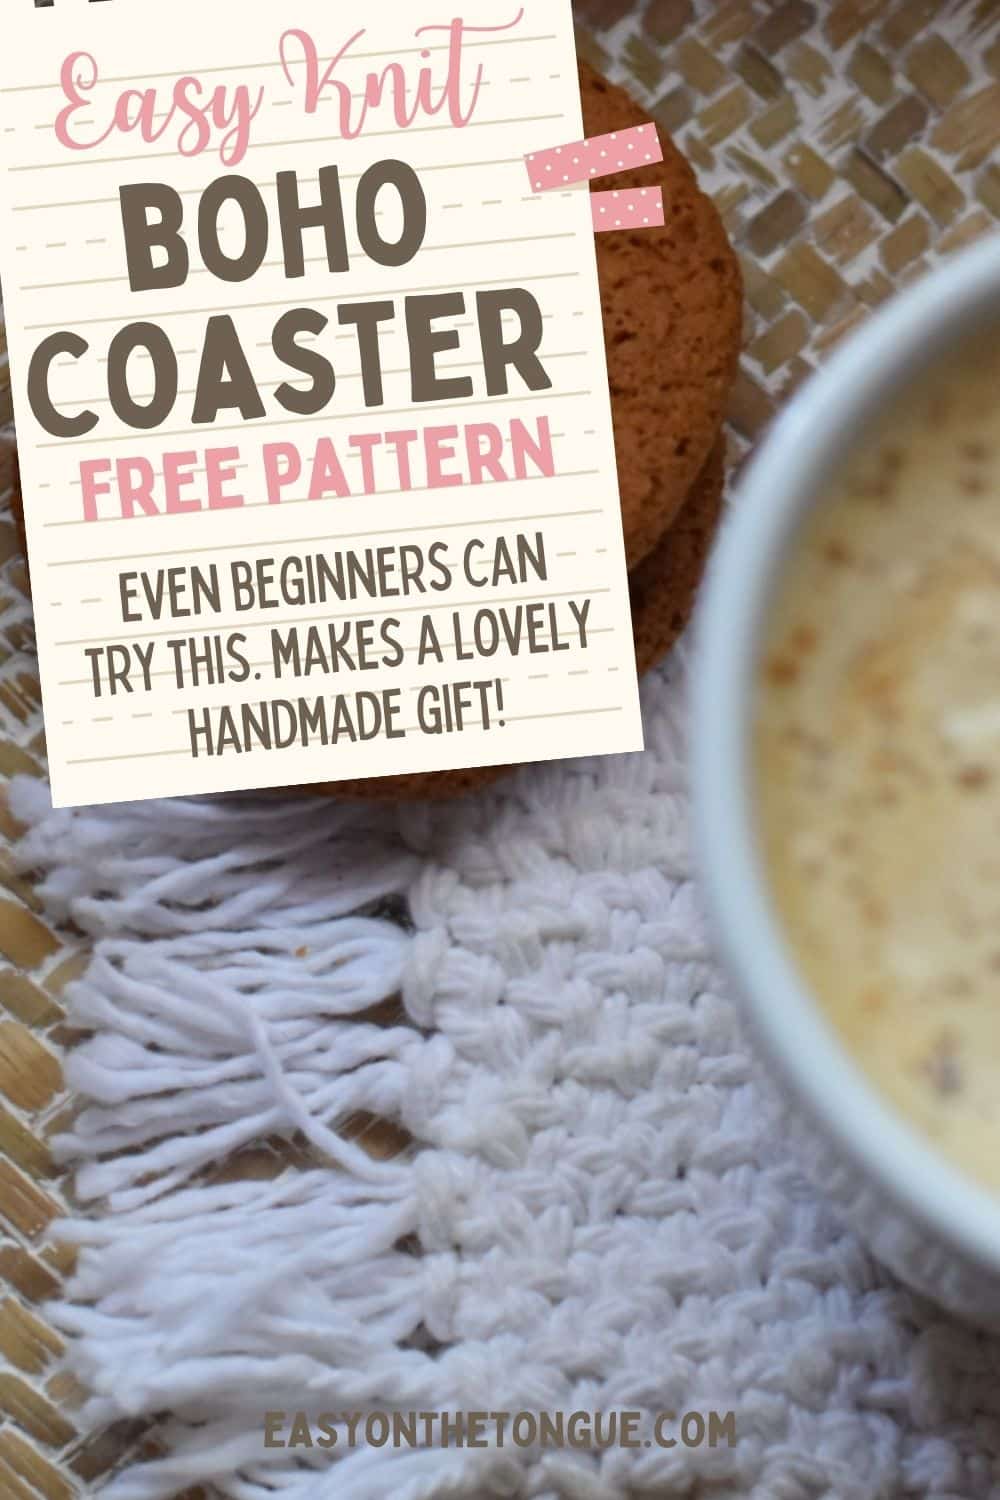 How to knit Boho Coasters or Mug Rugs. Free pattern by easyonthetongue.com  How to Knit Boho Coasters Free Pattern